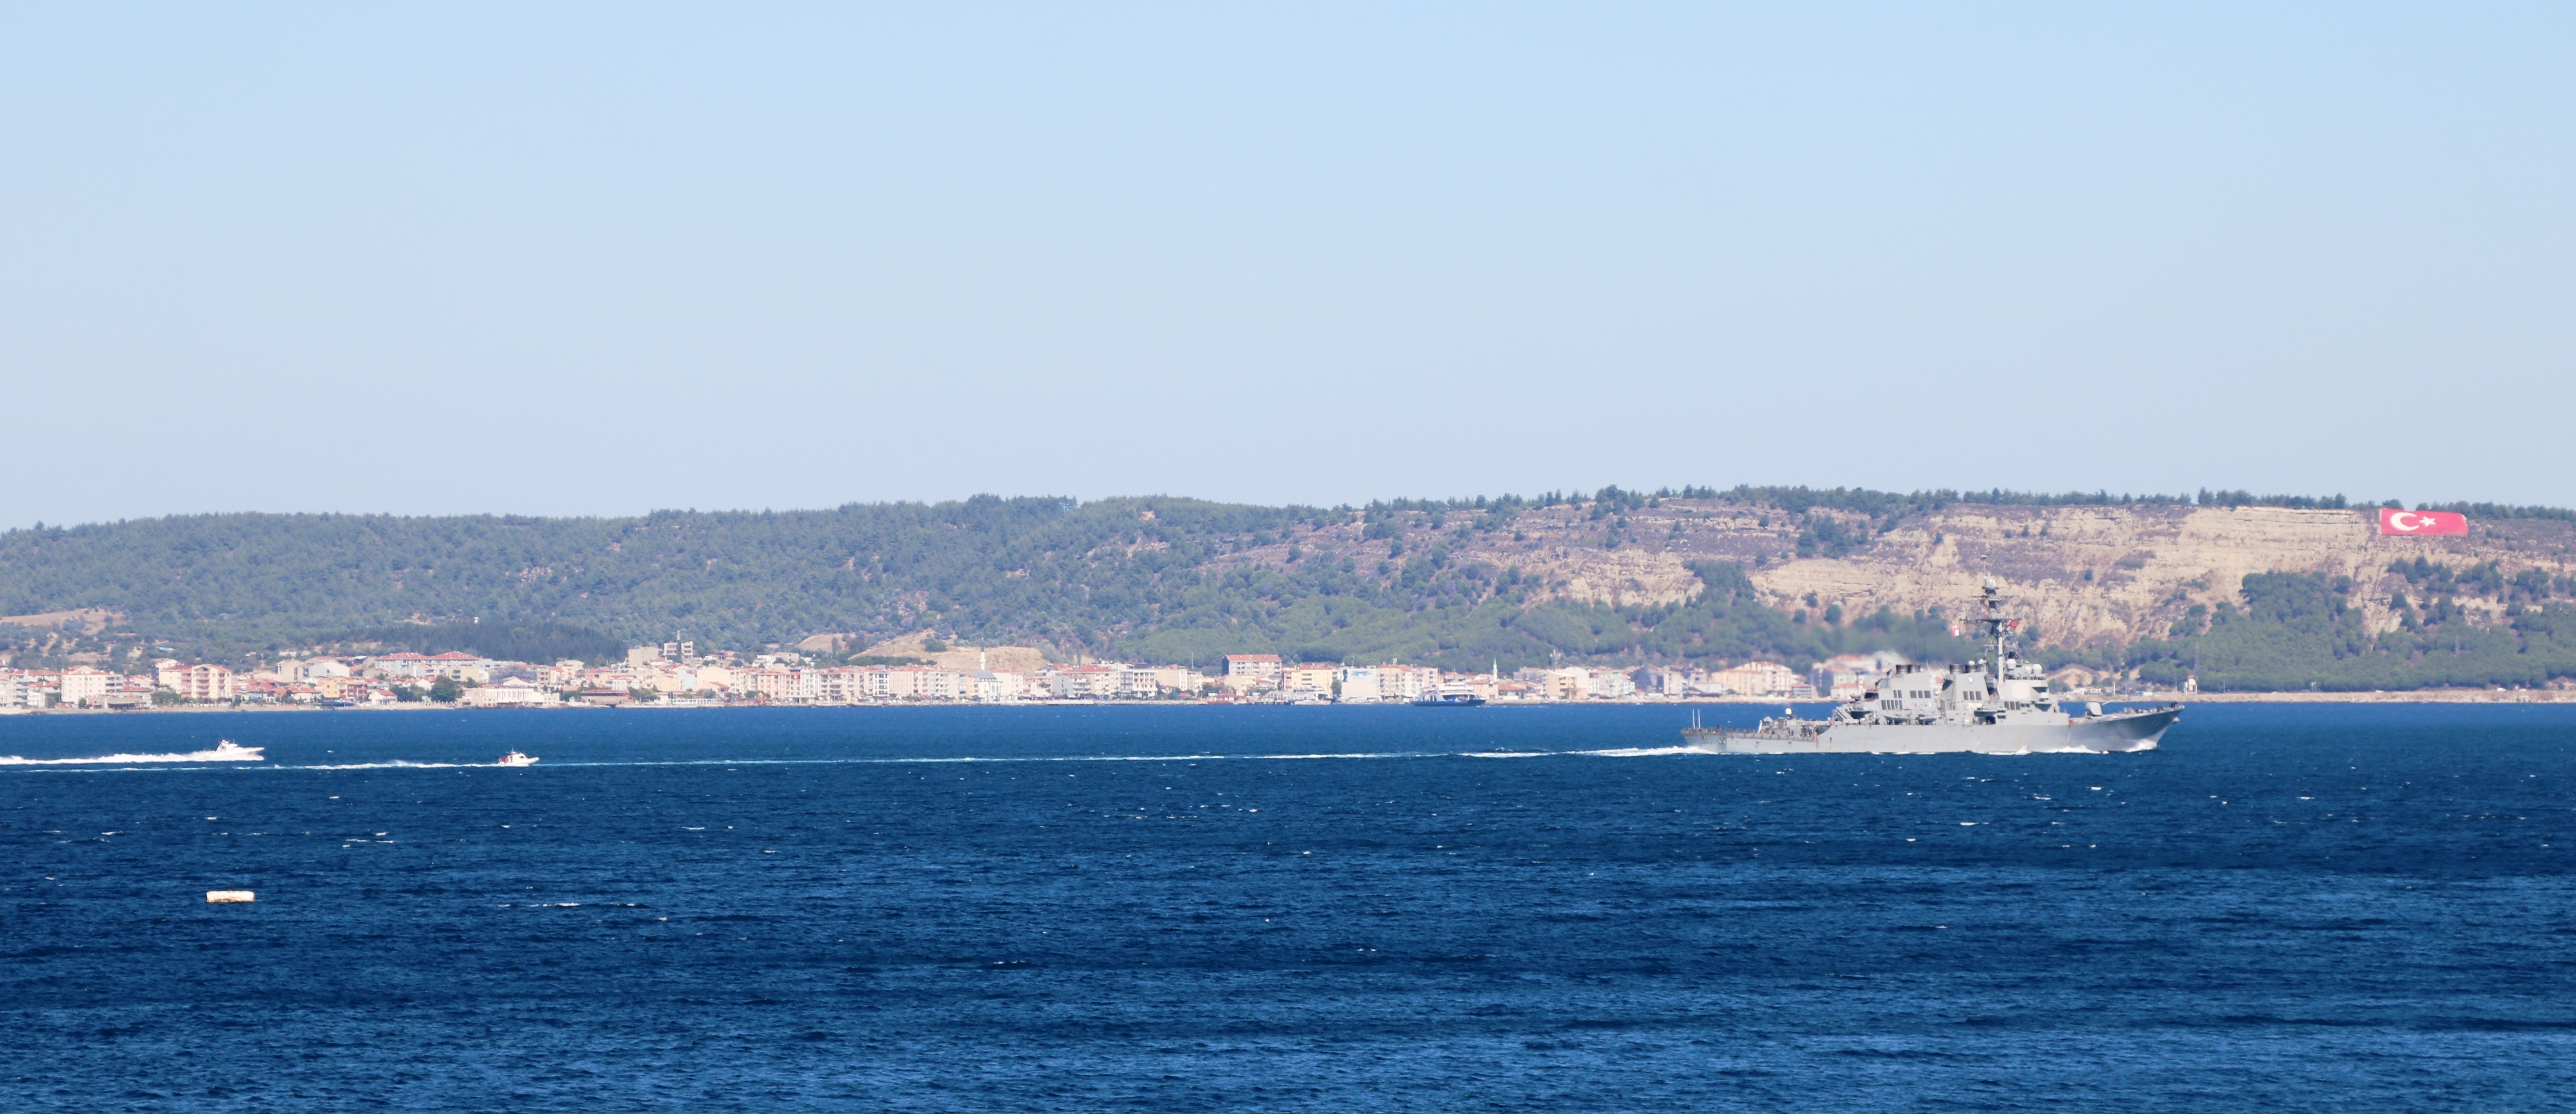 US Navy ship passes through Dardanelles Strait